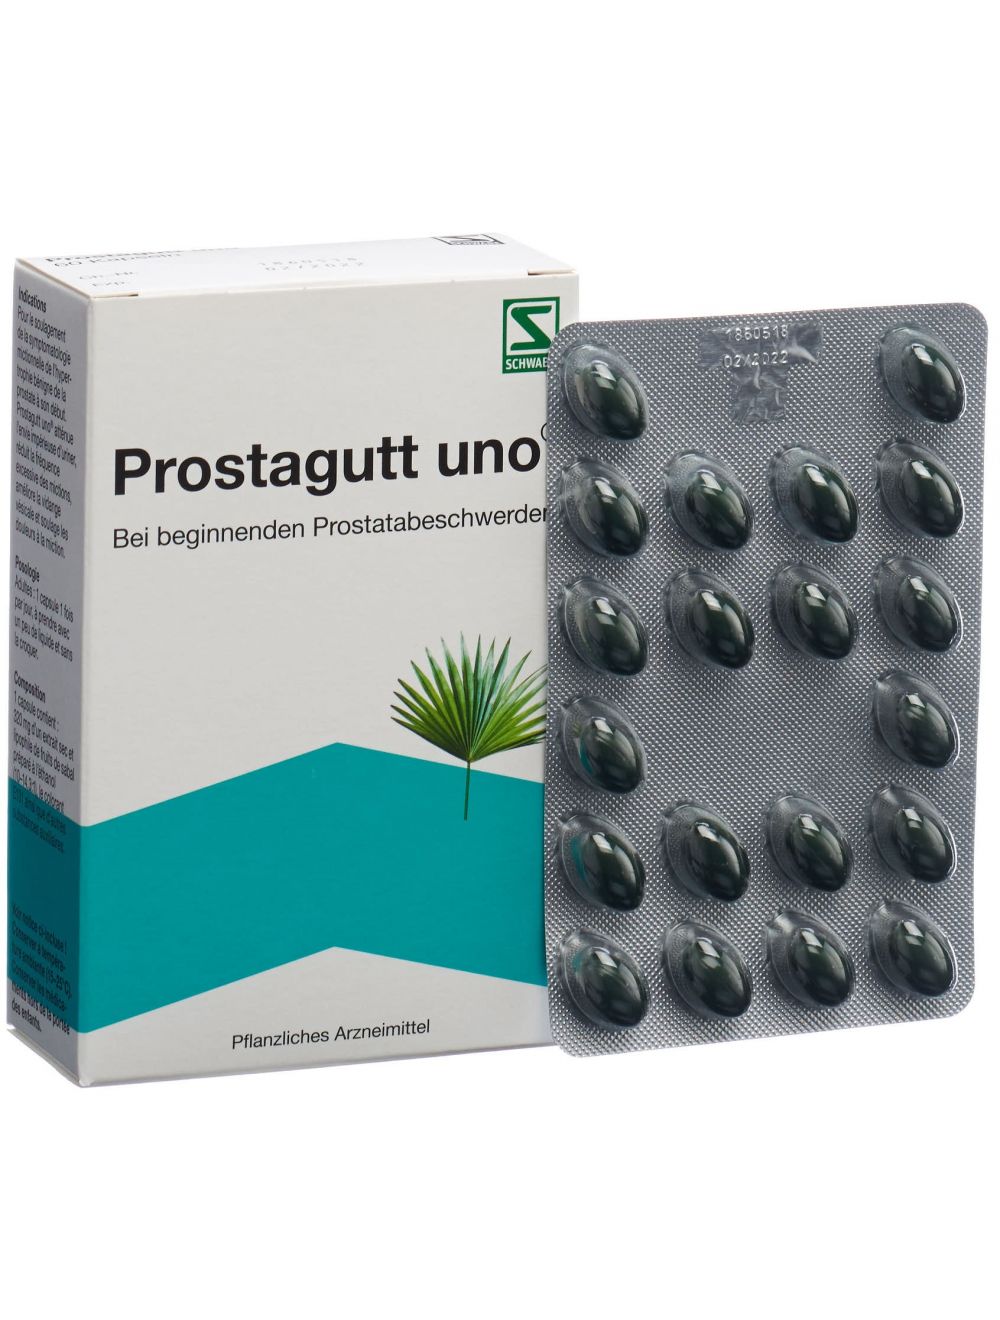 Doza de fluconazol la prostate